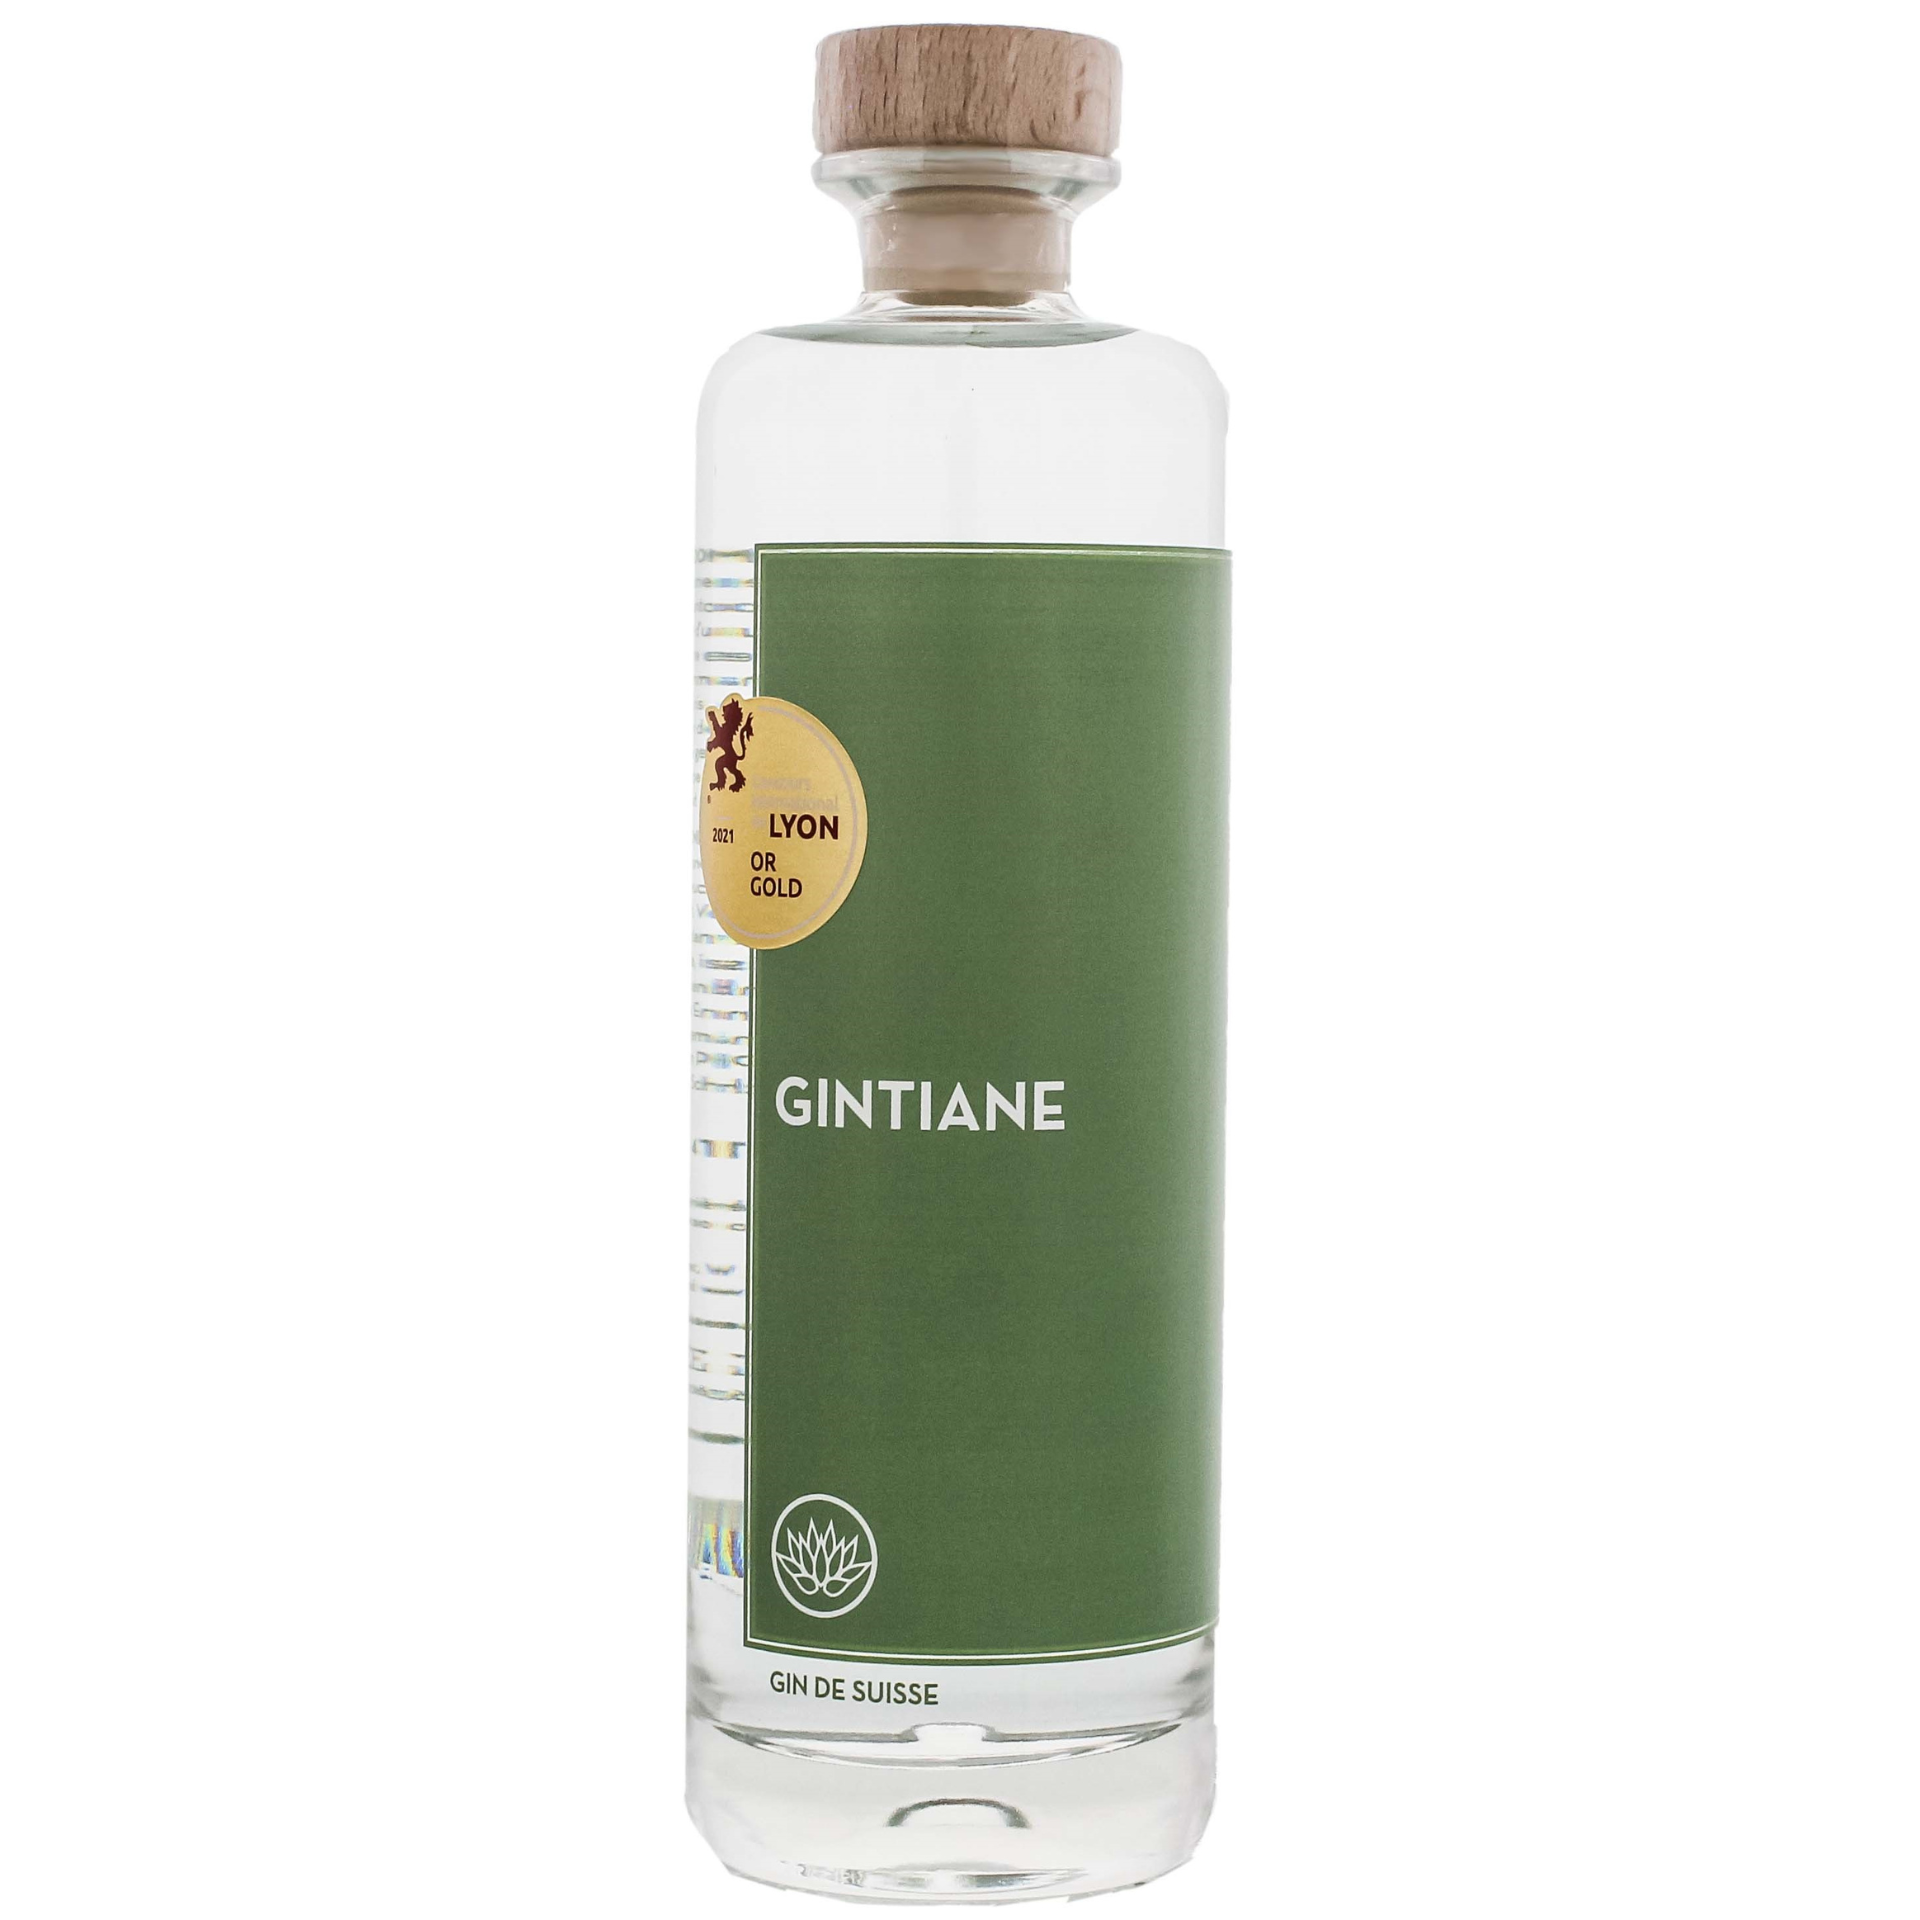 Larusee Gintiane Gin 41% 0,5l